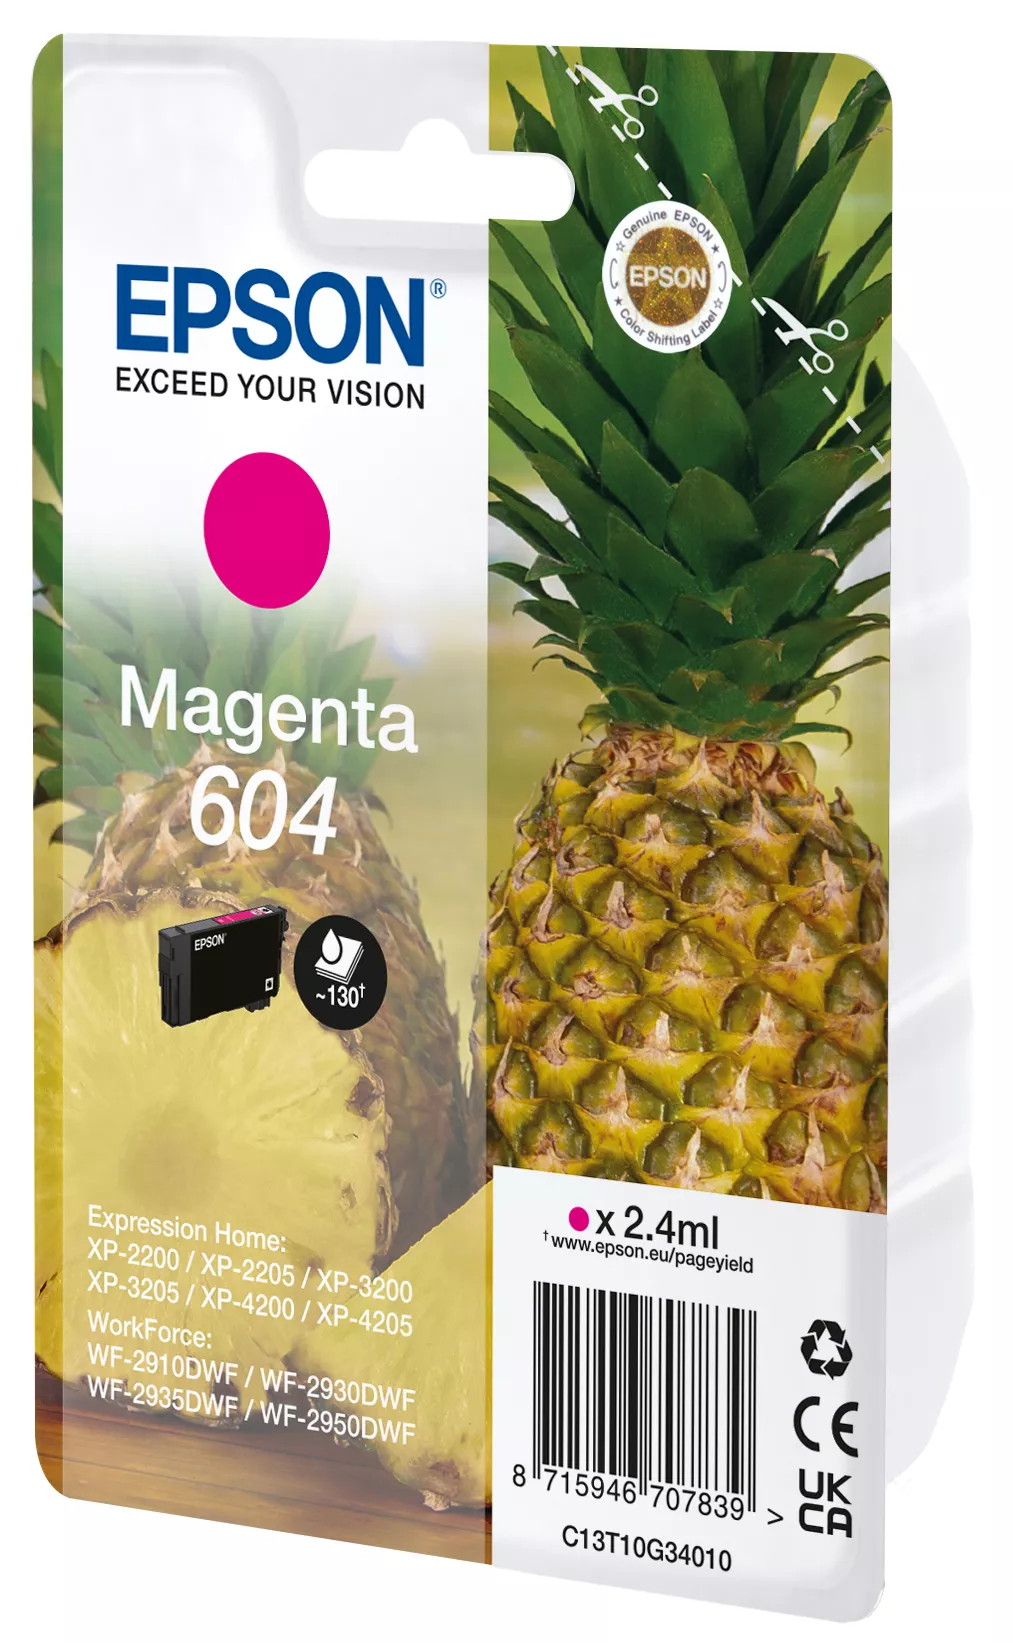 Achat EPSON Singlepack Magenta 604 Ink au meilleur prix